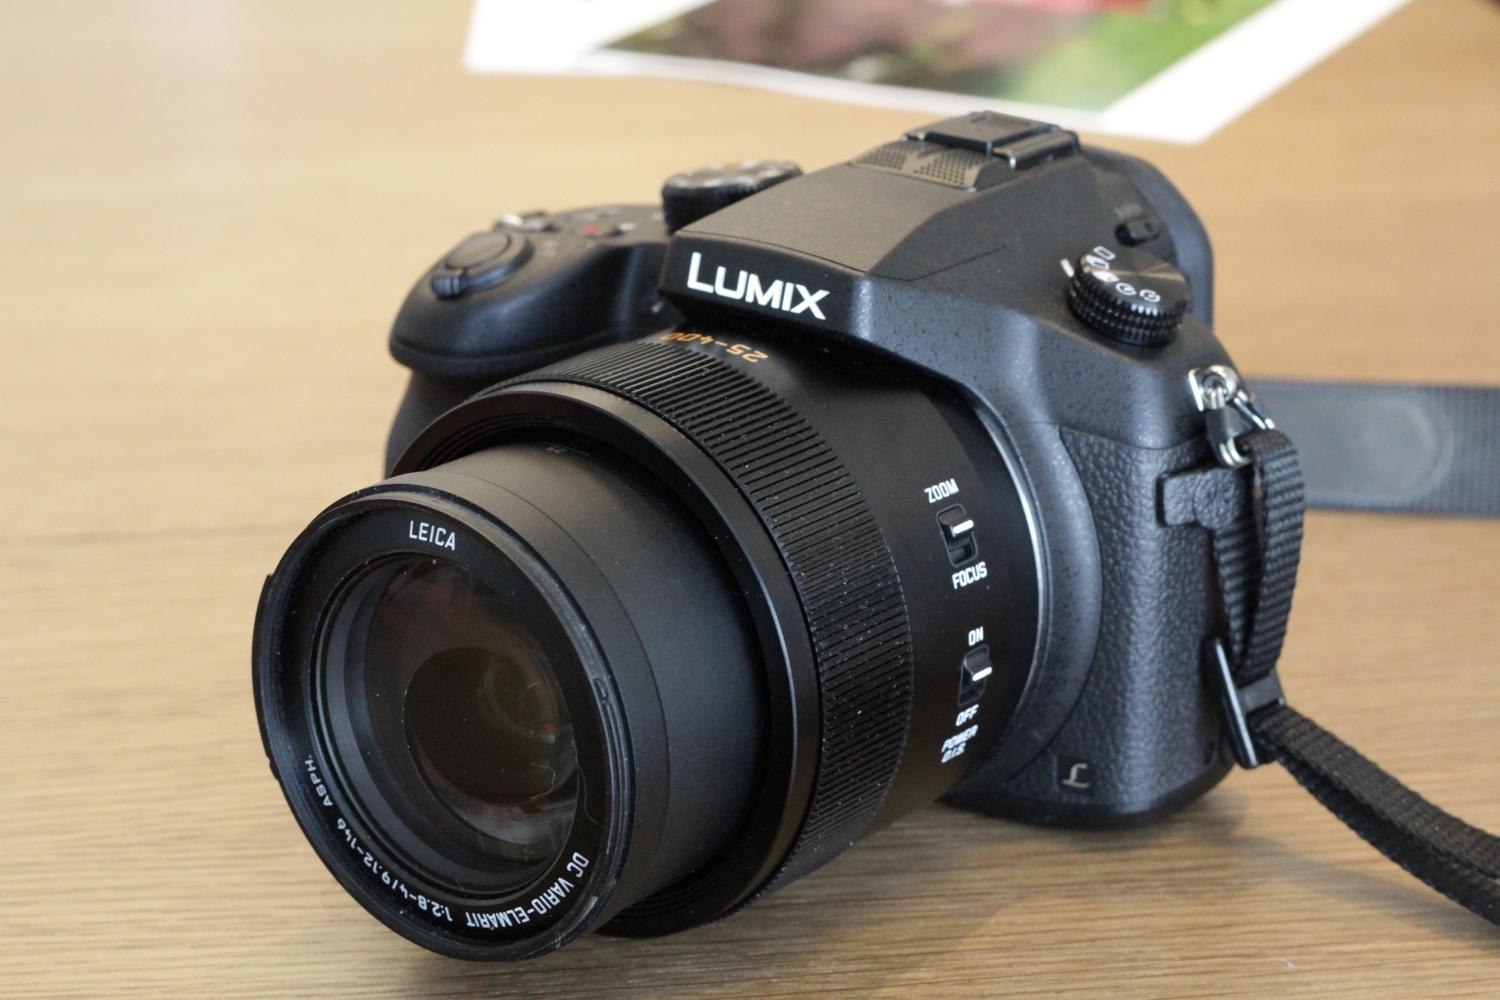 panasonic introduces 4k capable lumix fz1000 bridge camera img 1310